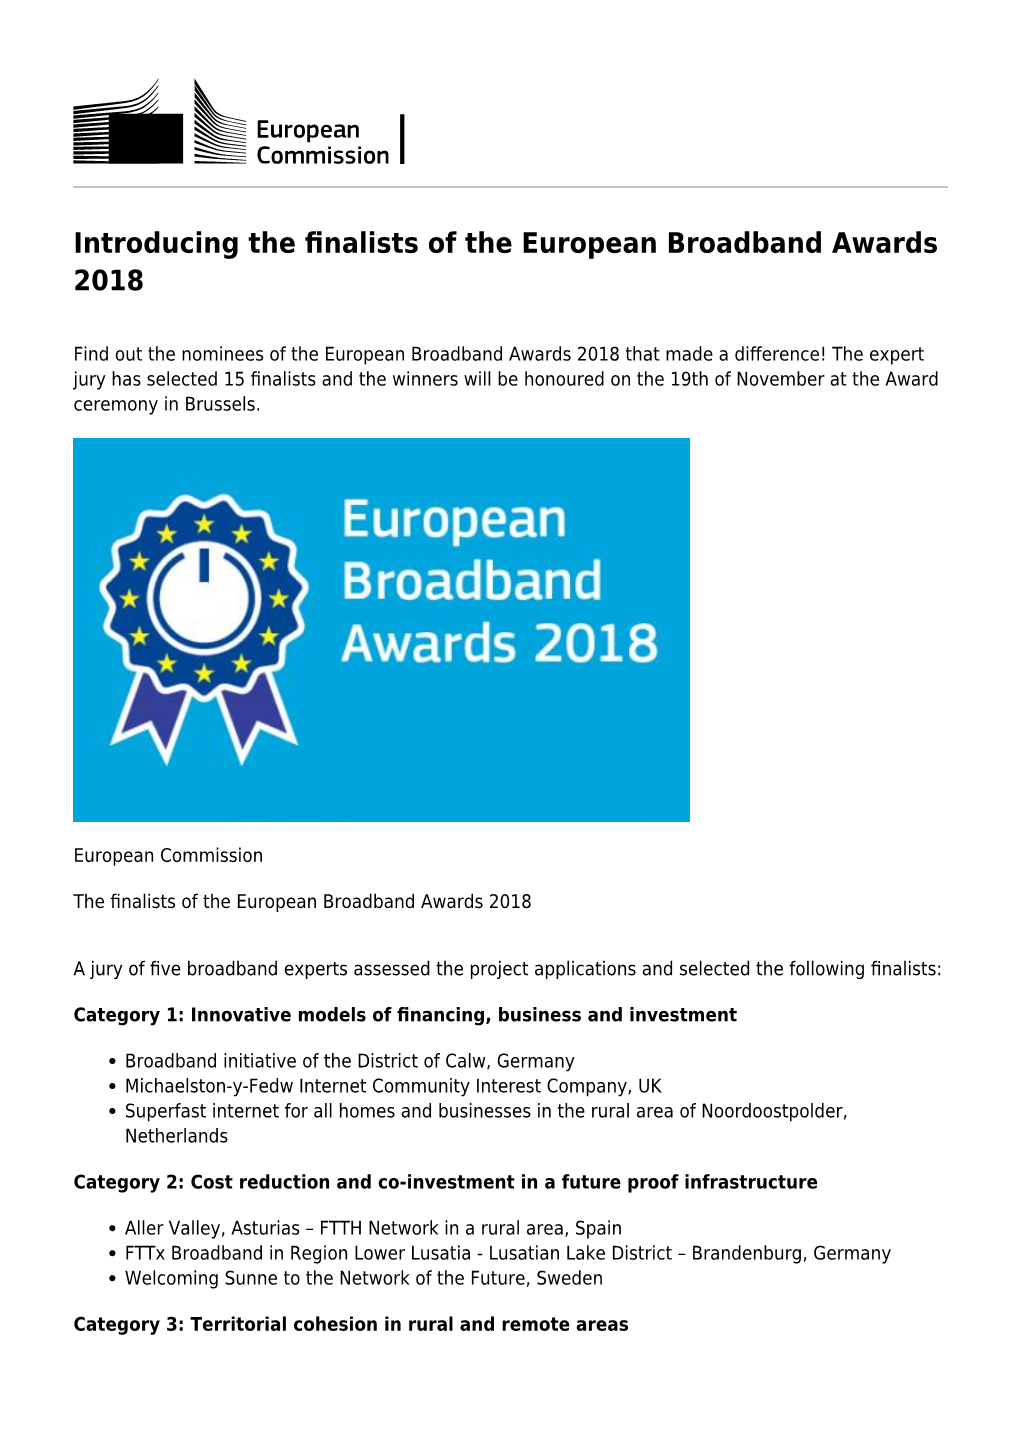 Introducing the Finalists of the European Broadband Awards 2018